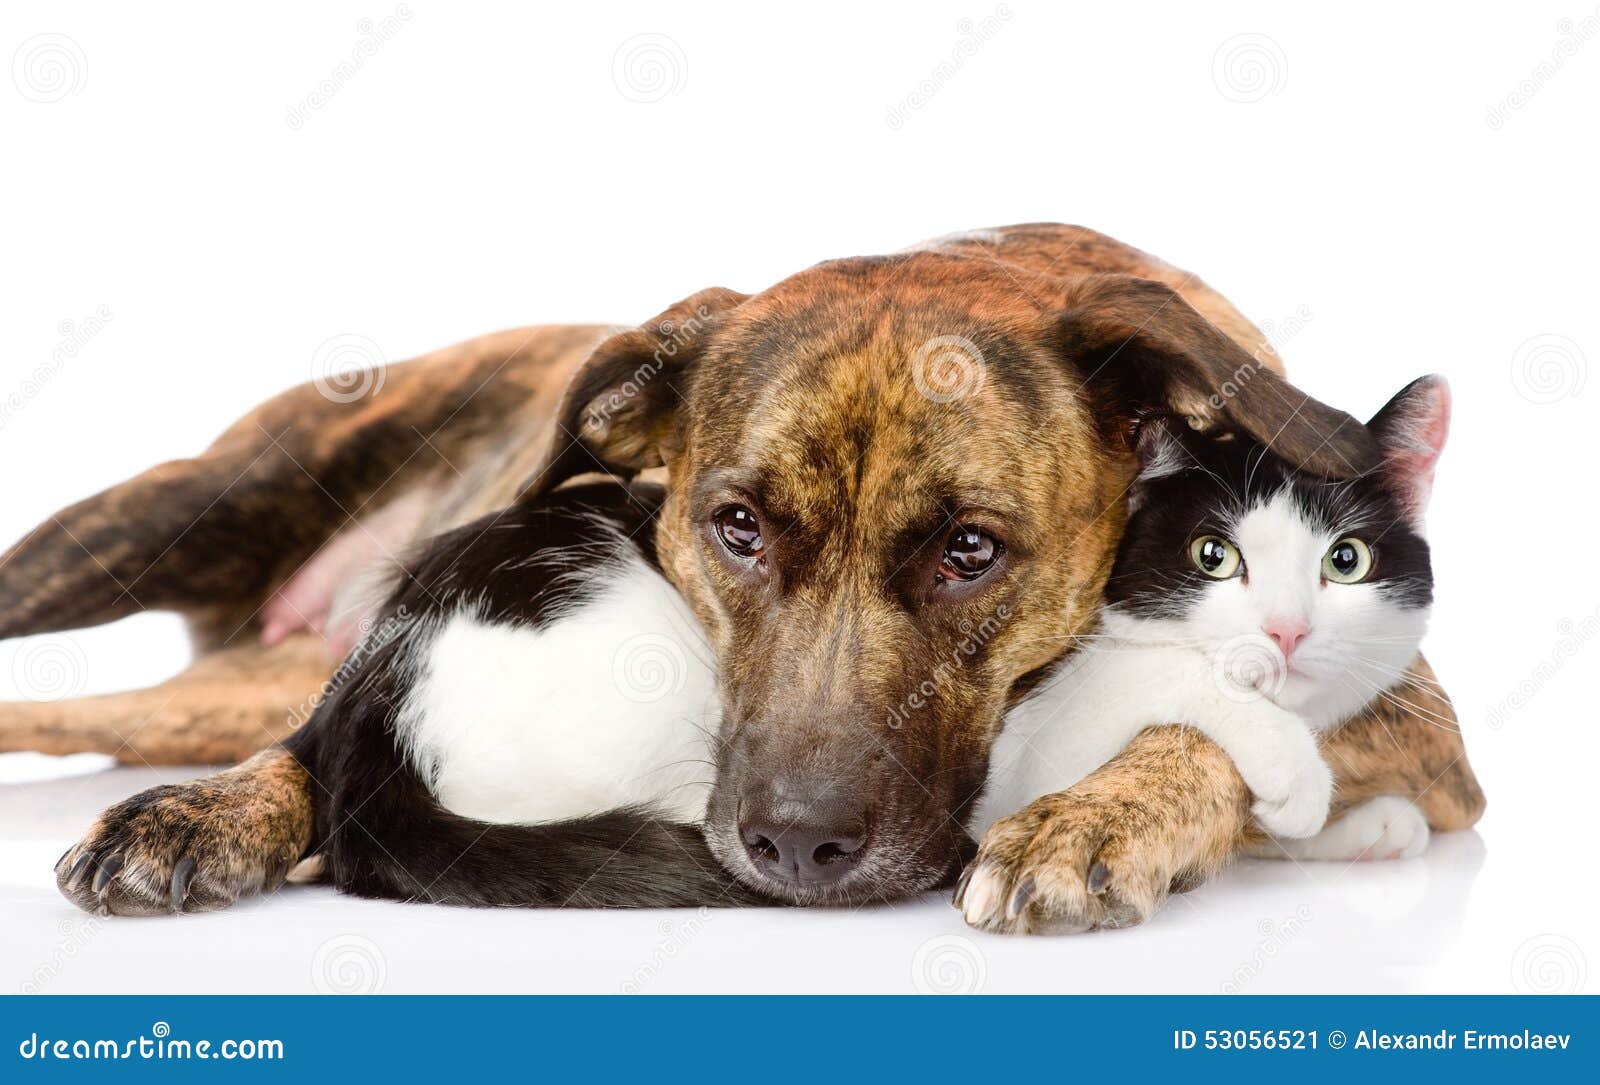 Betjene patron Athletic Mixed Breed Dog and Cat Lying Together. Isolated on White Backgr Stock  Image - Image of care, camera: 53056521